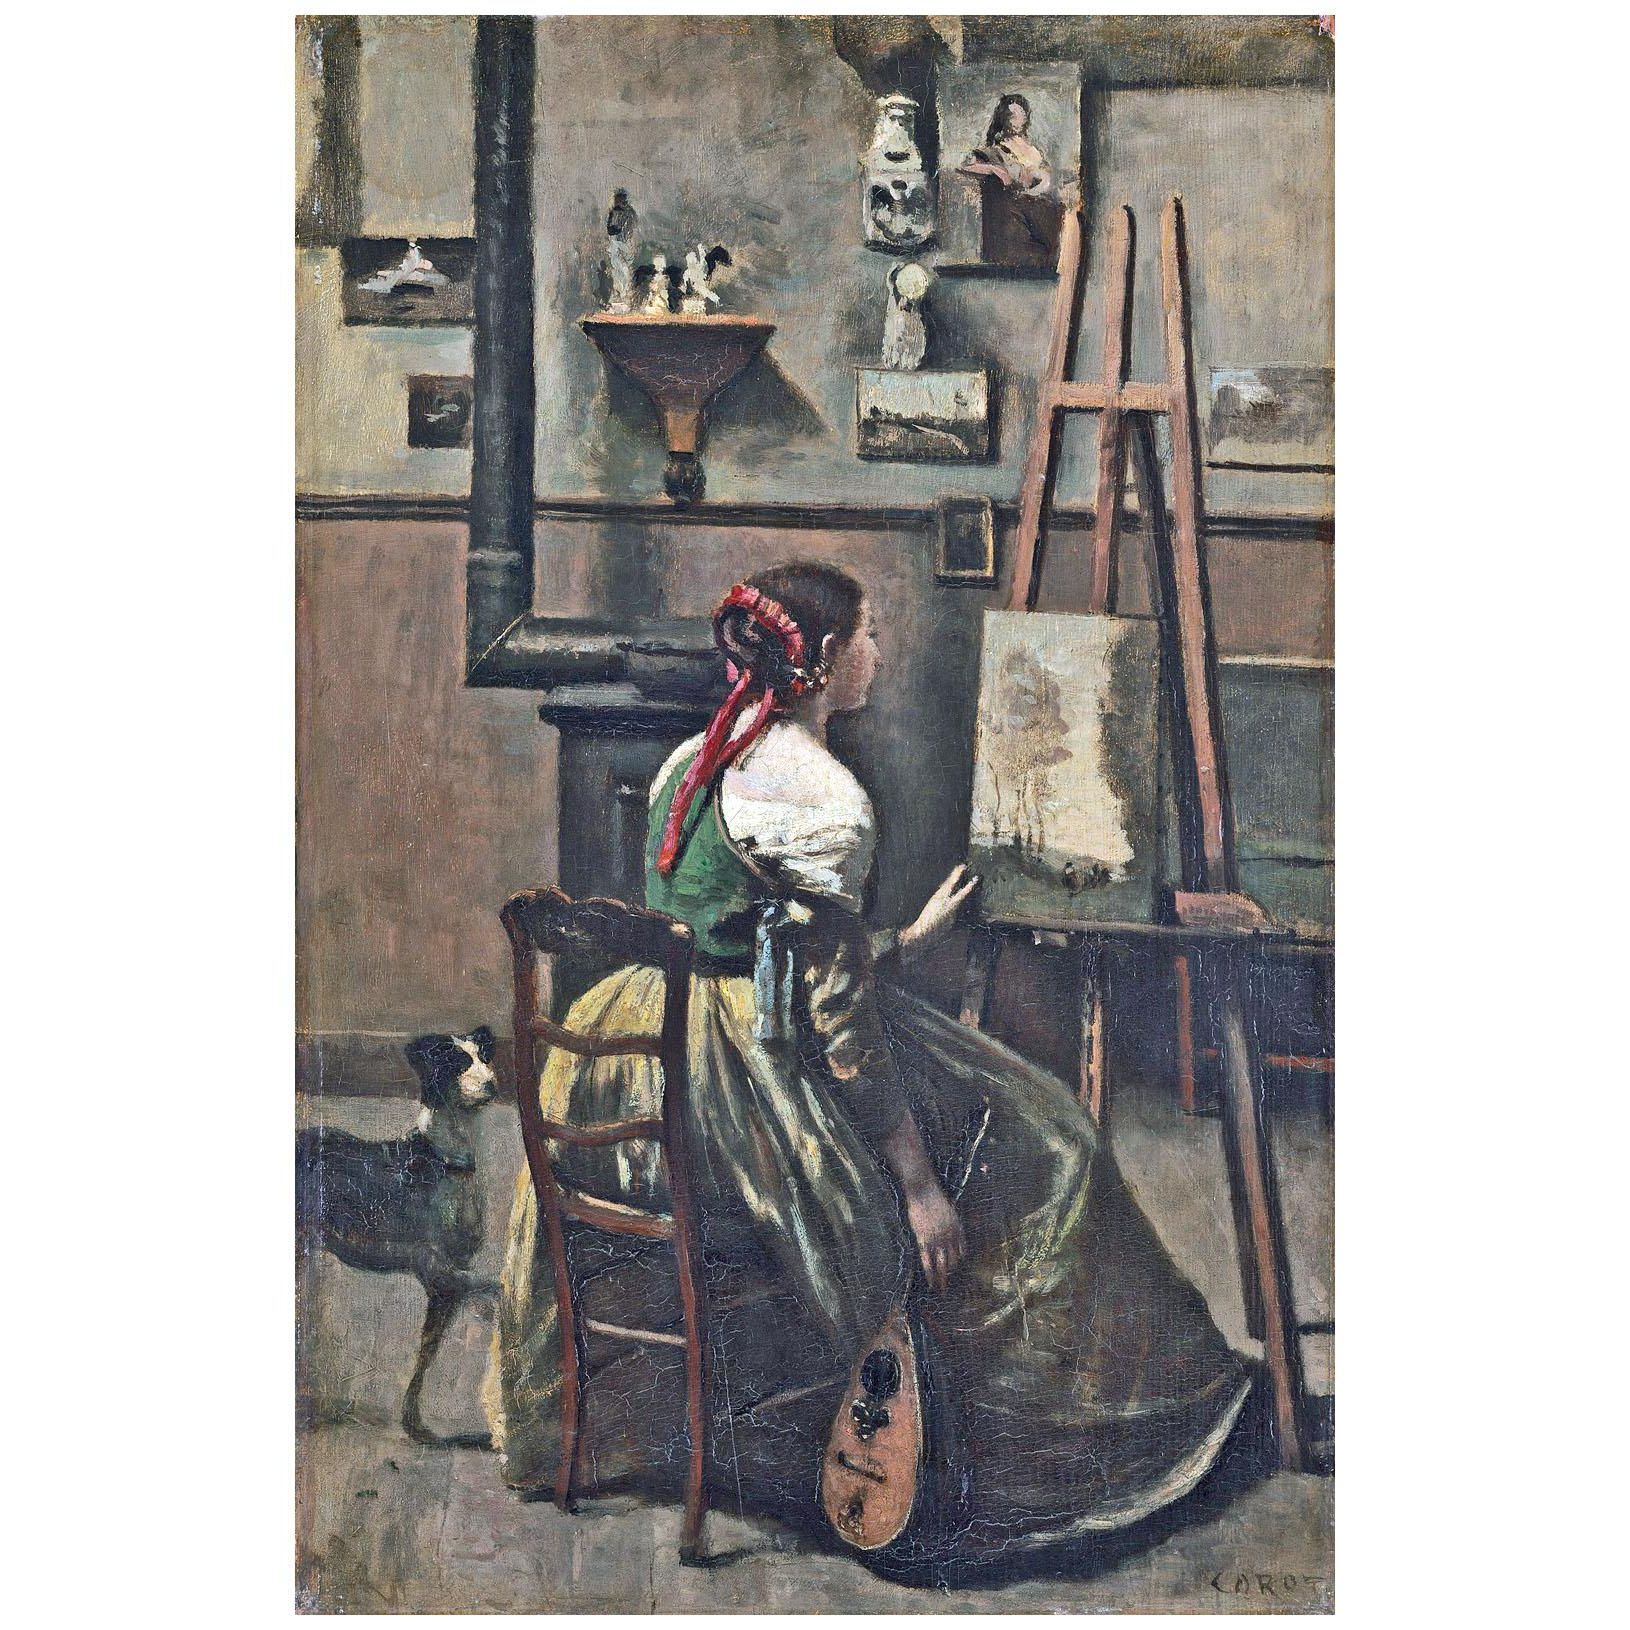 Camille Corot. L'Atelier de l'artiste. 1868. NGA Washington